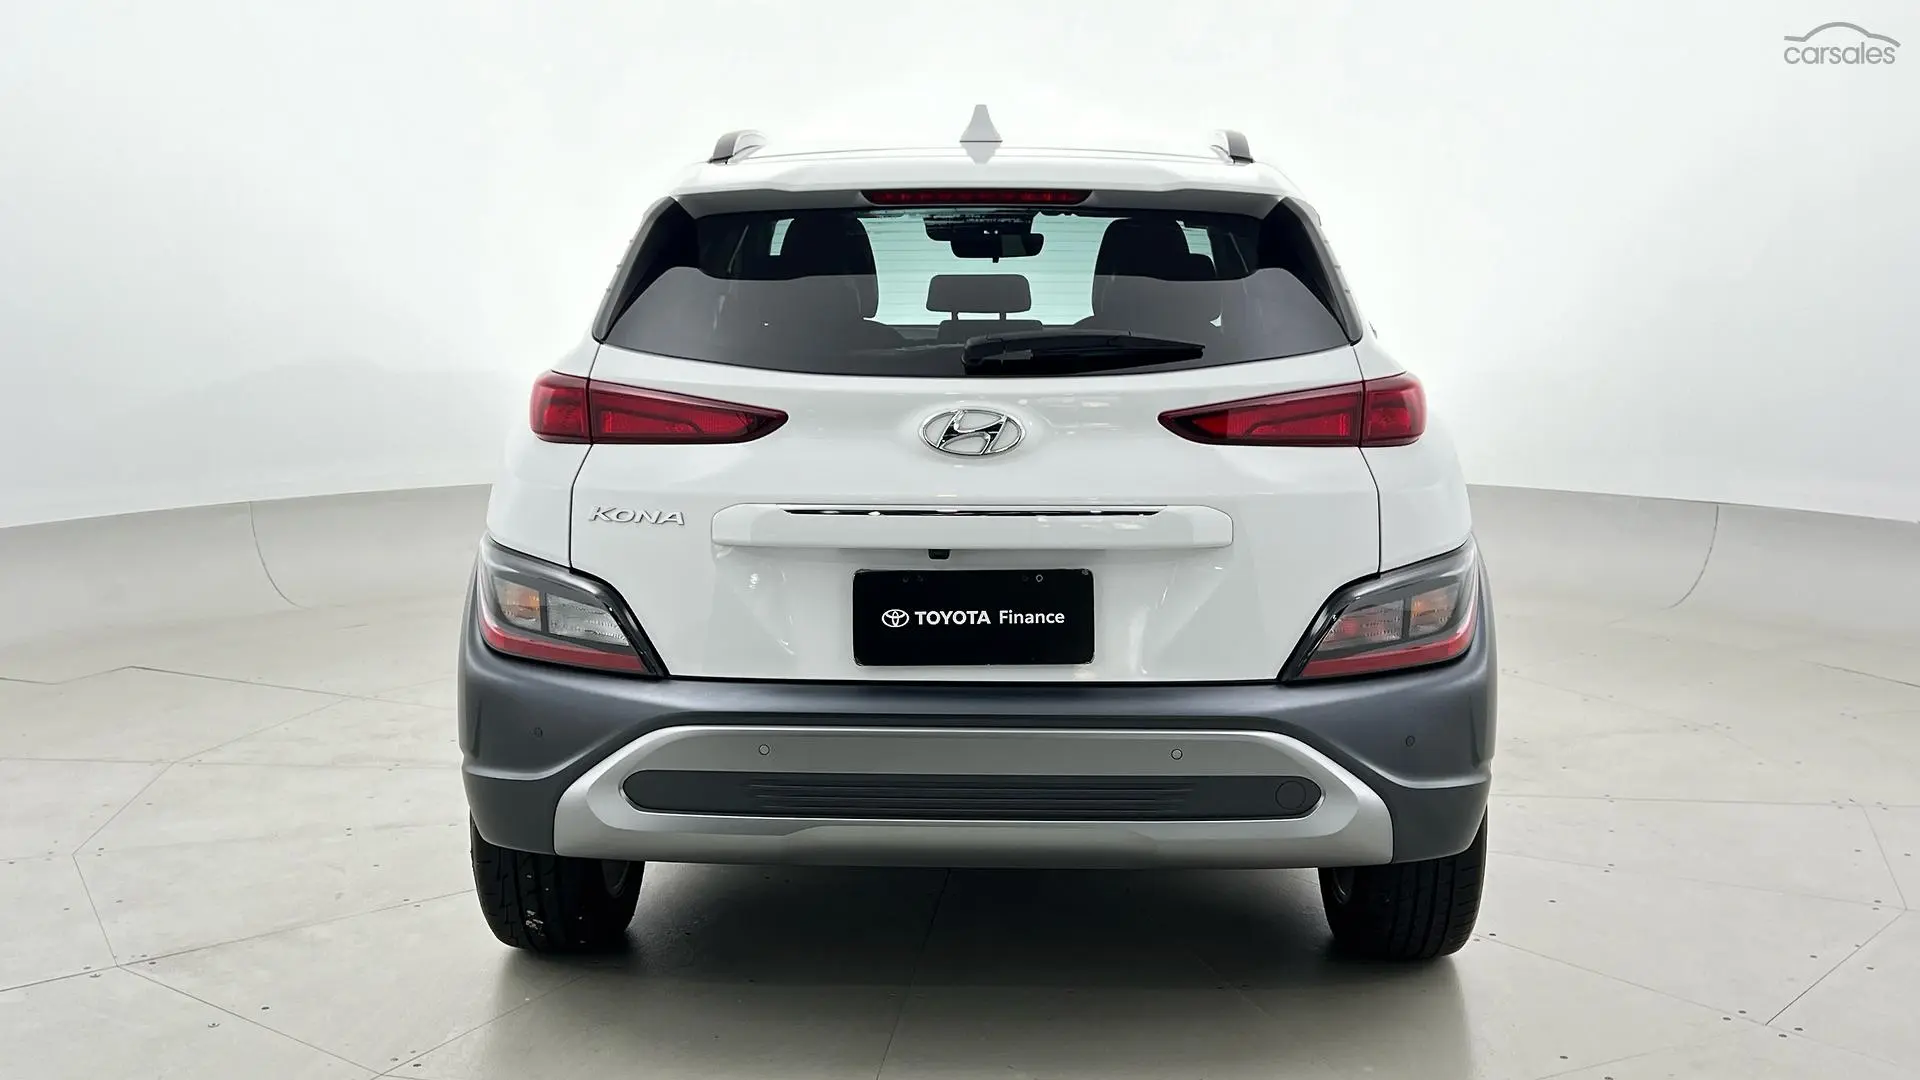 2021 Hyundai Kona Image 6